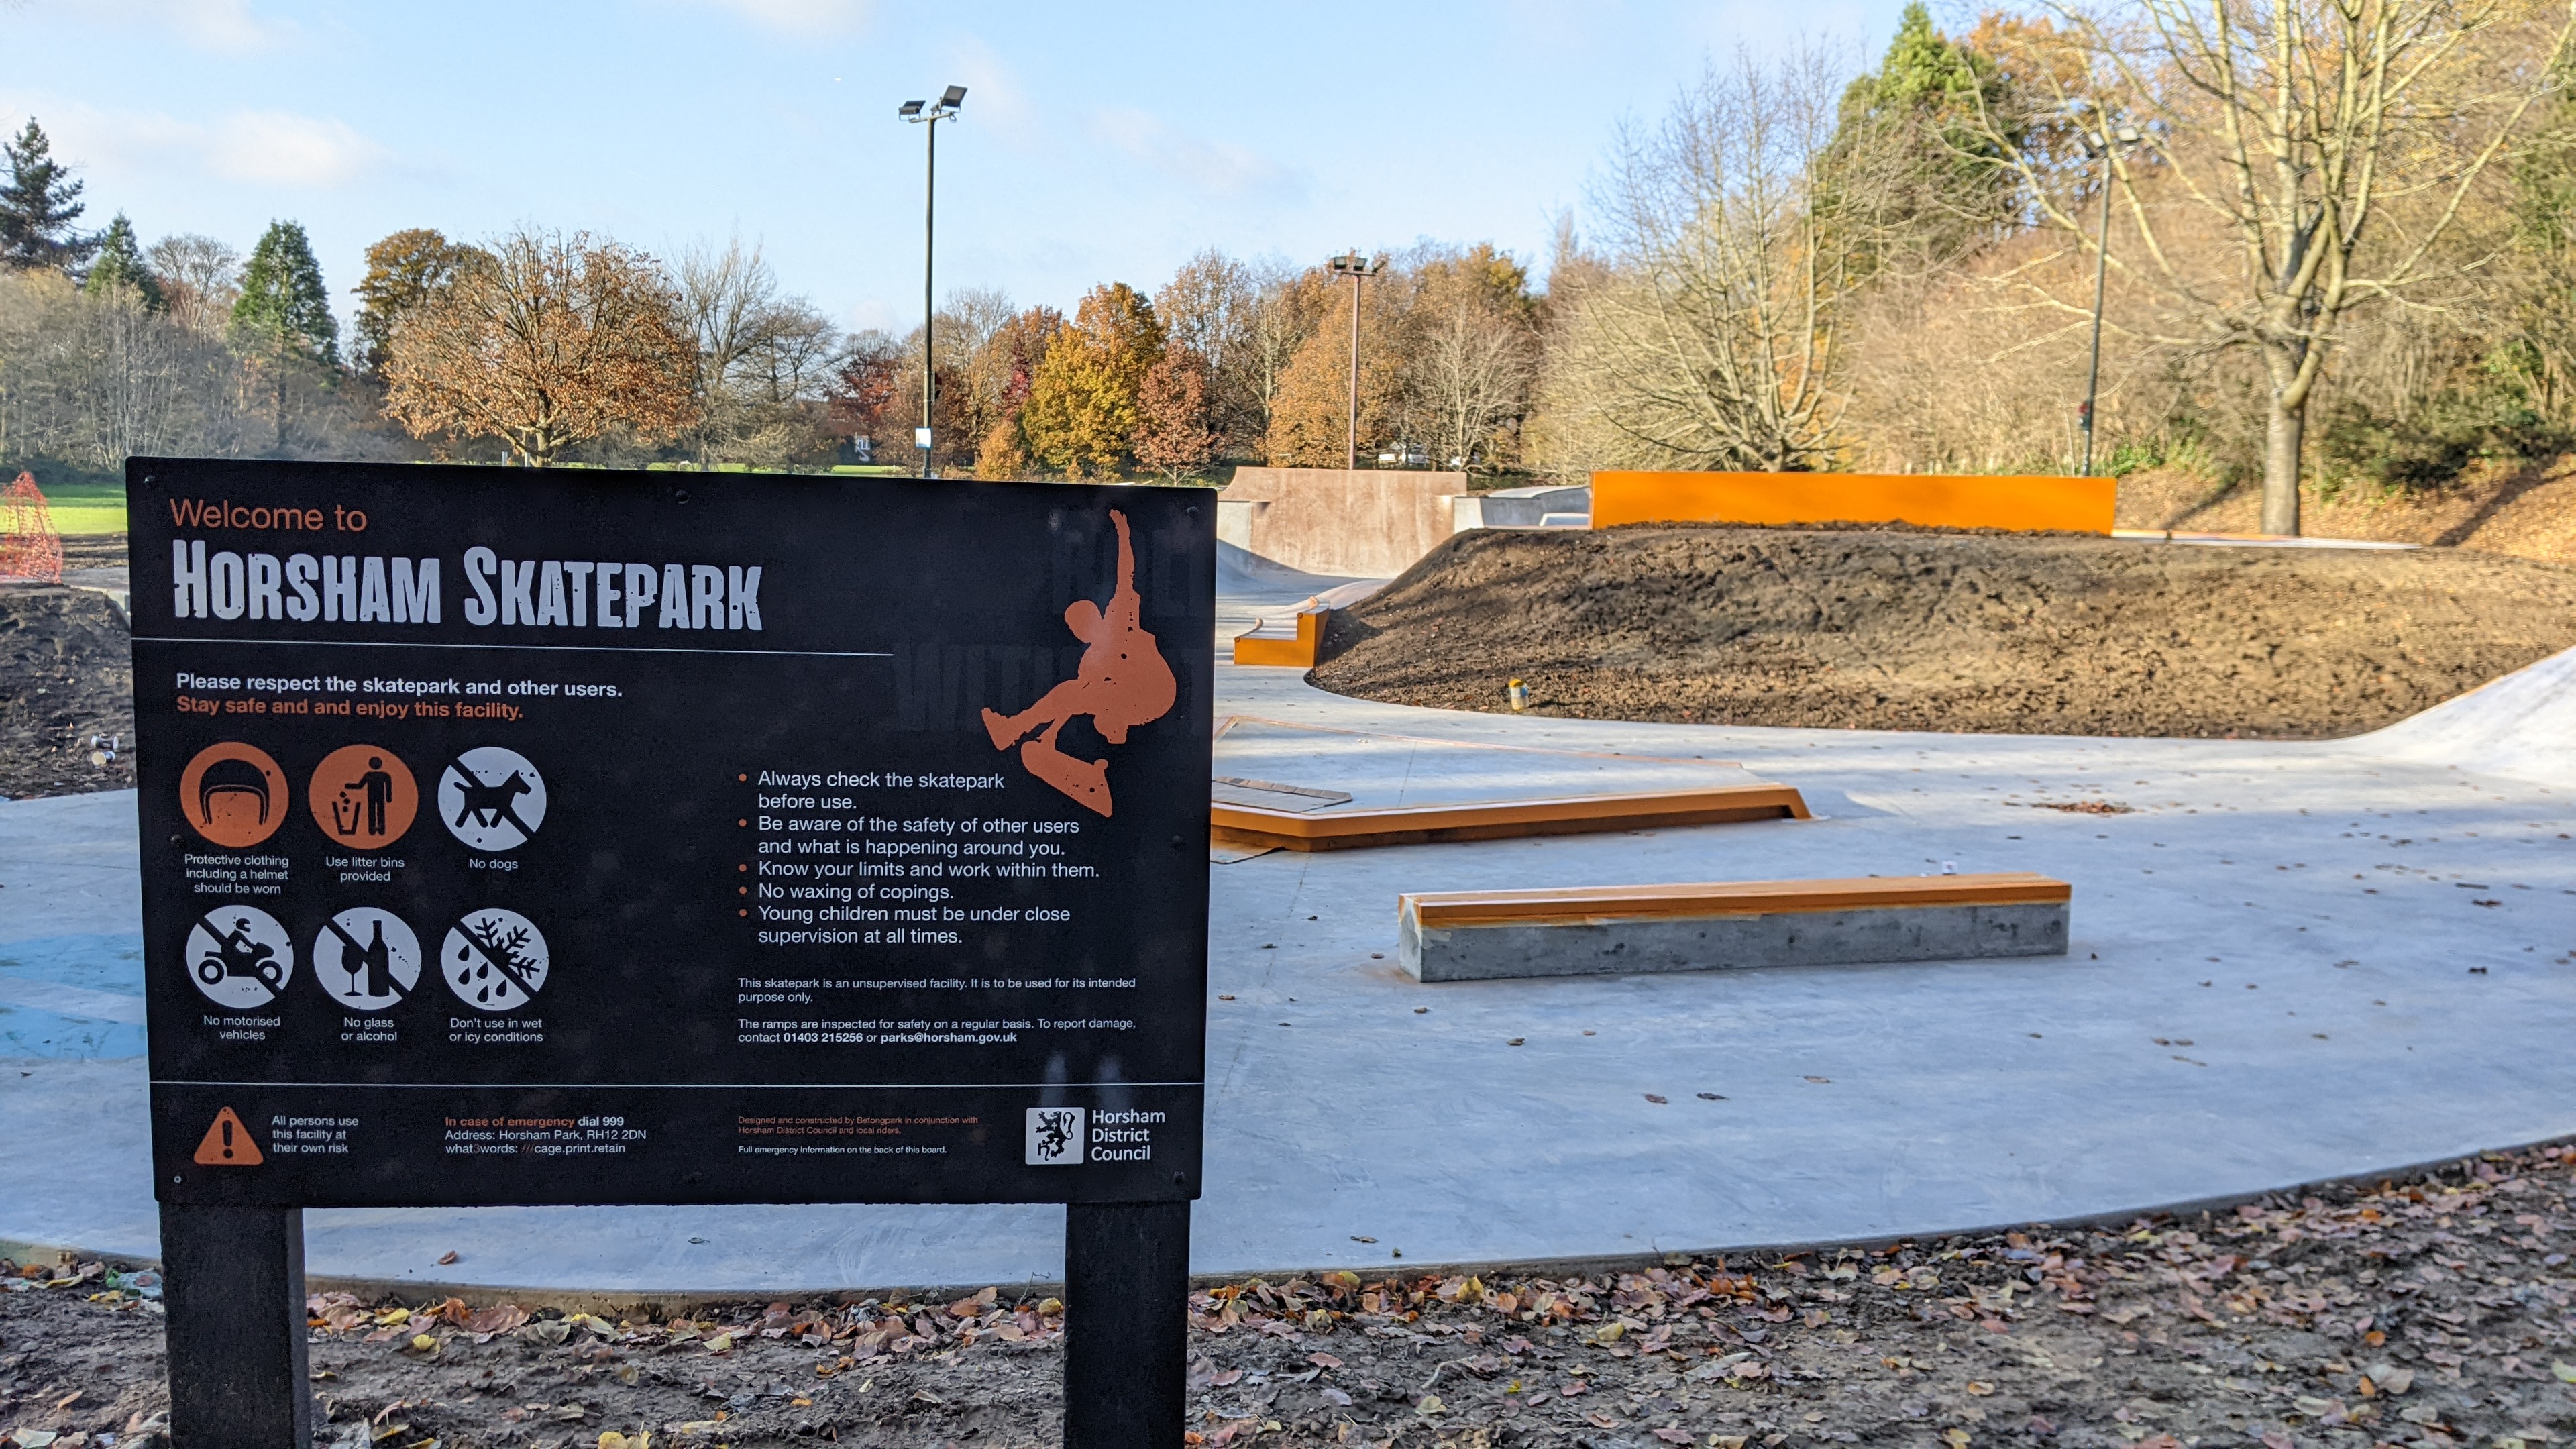 Horsham skate park sign with the concrete park behind it